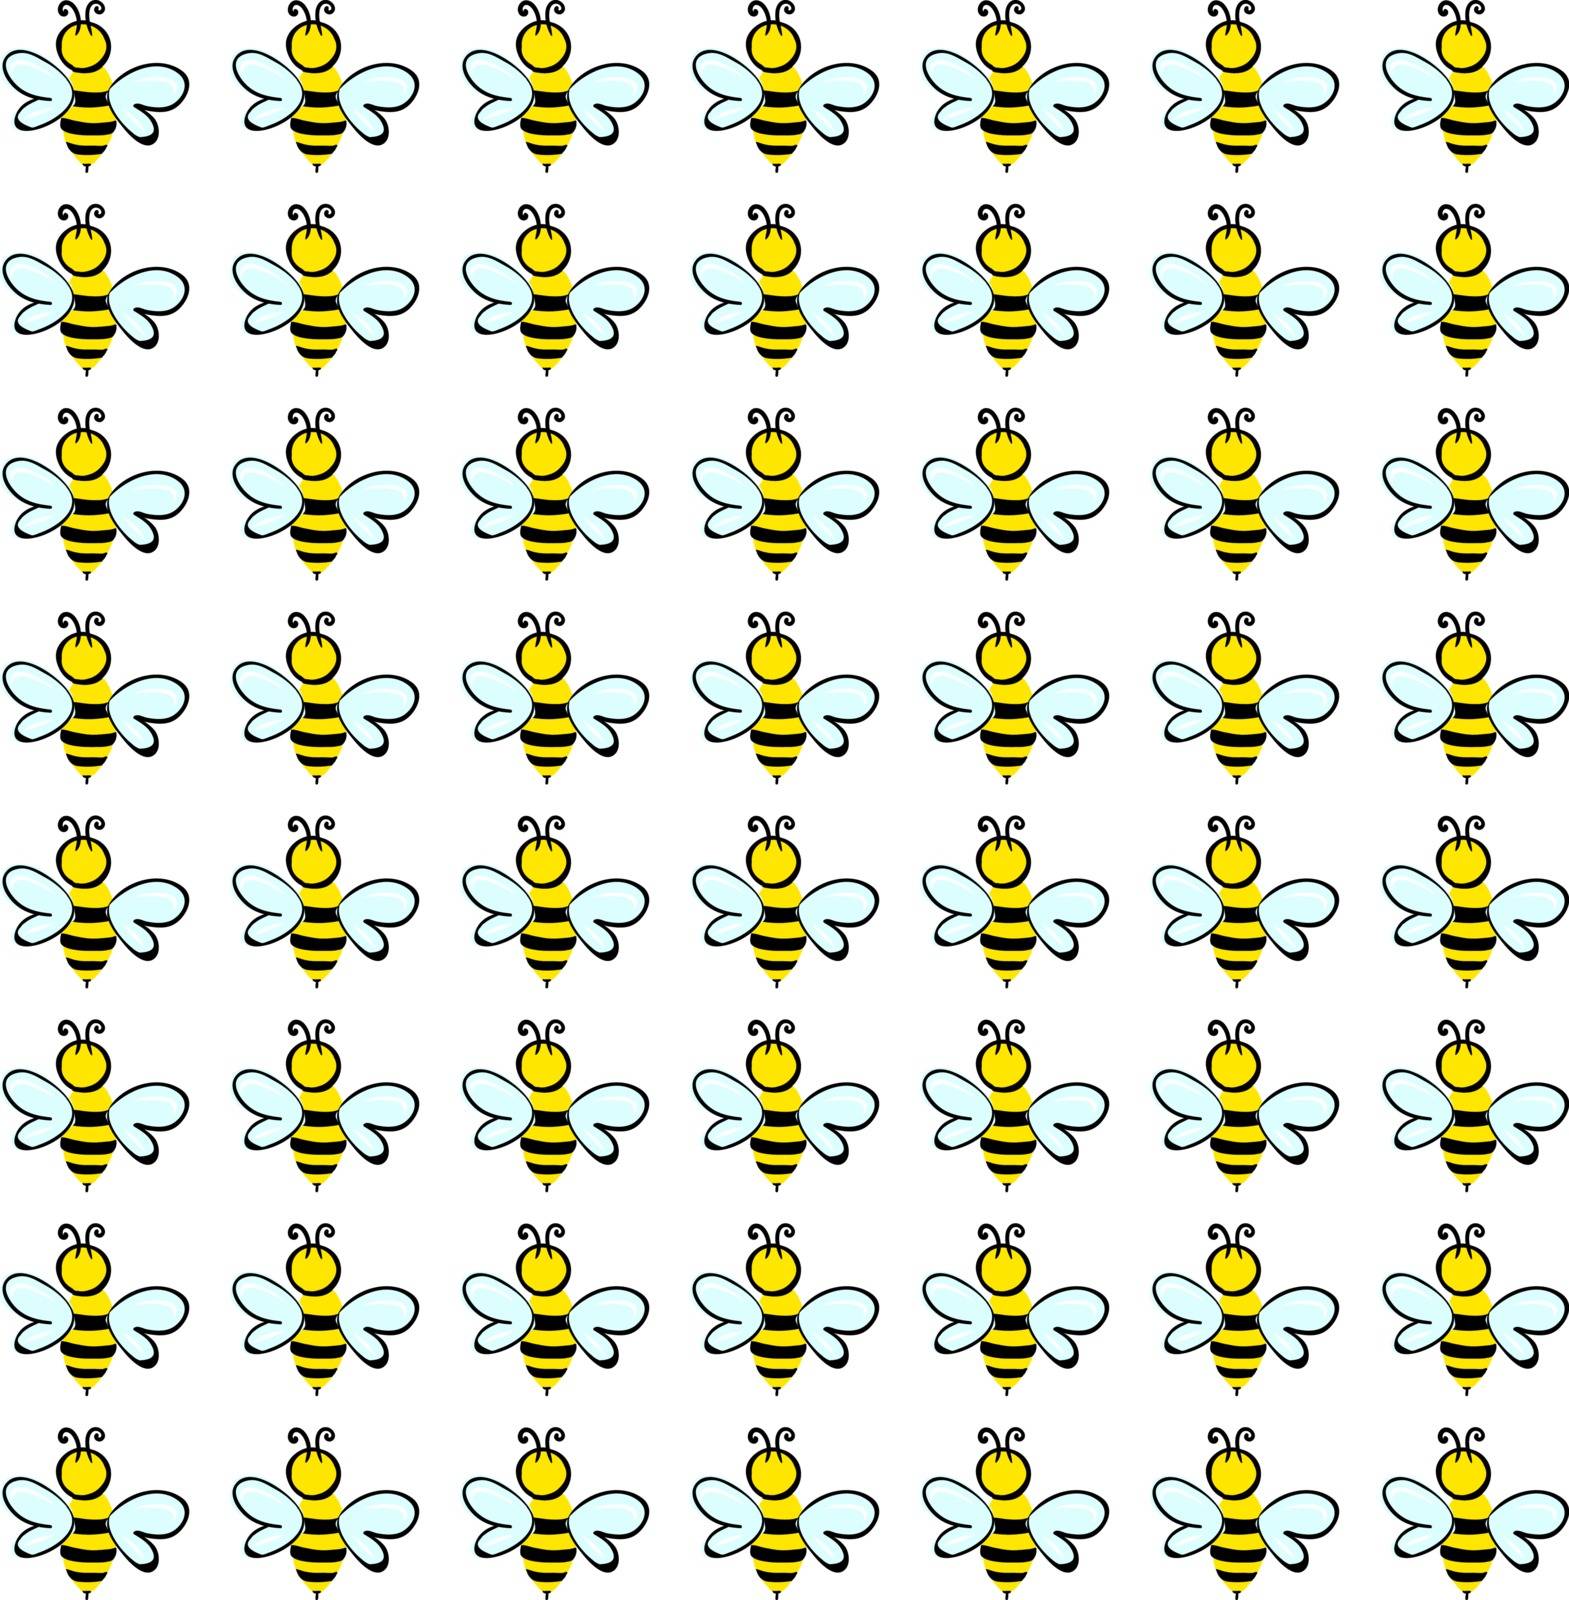 Bee wallpaper, illustration, vector on white background. by Morphart